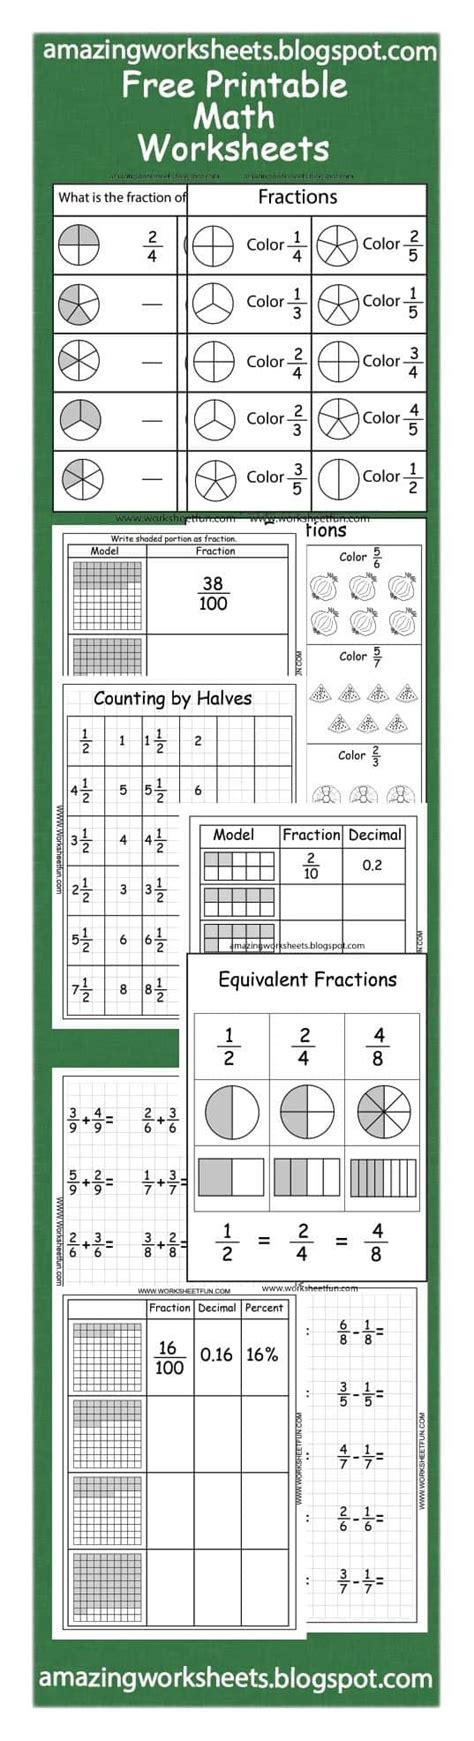 Free Printable Math Worksheets Homeschool Giveaways